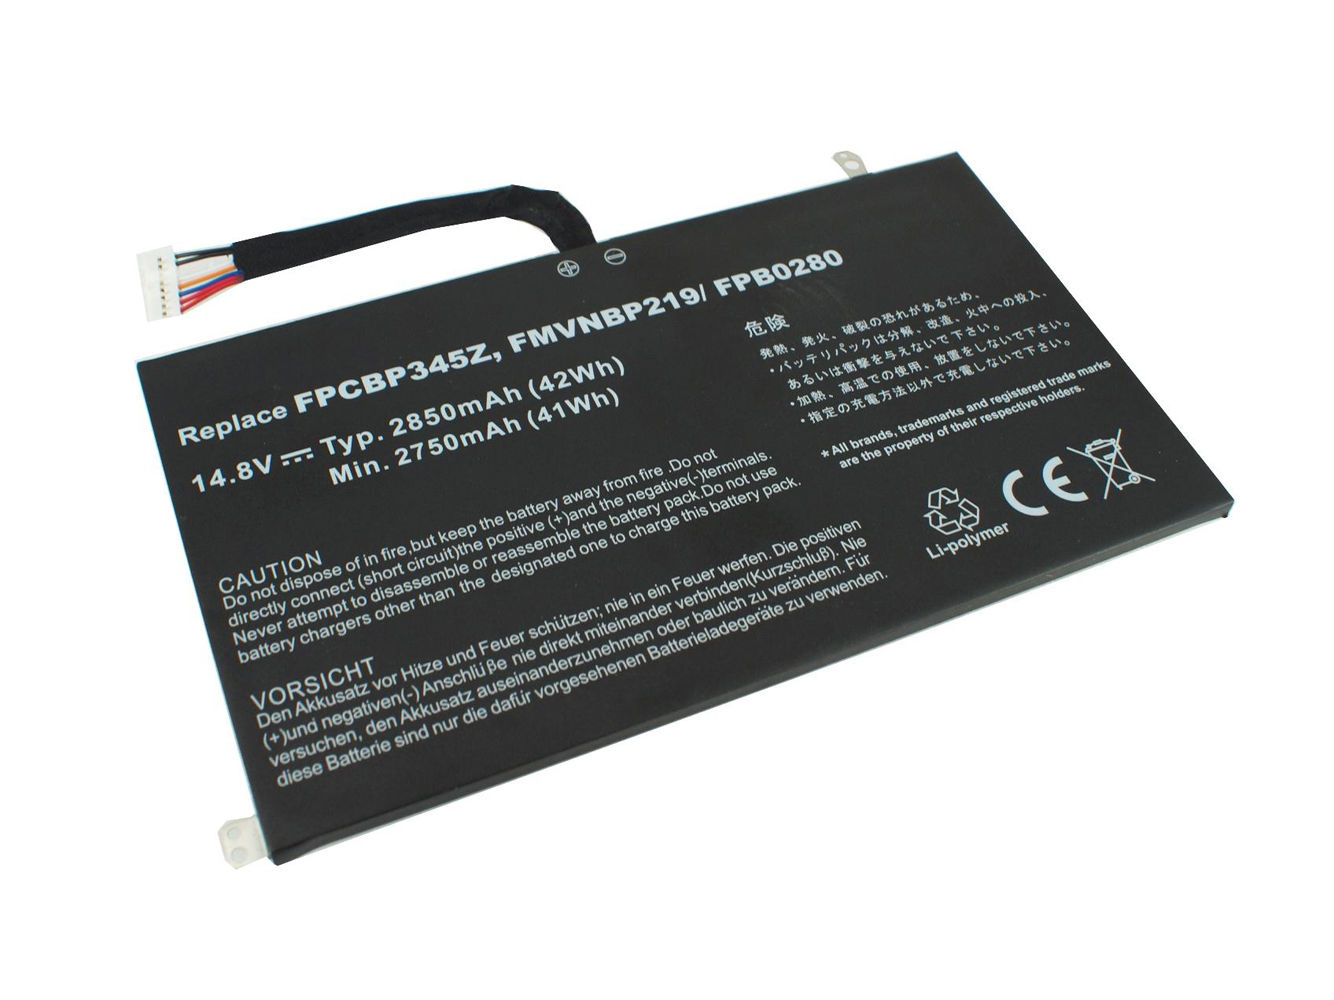 2850mAh Fujitsu UH572 FMVNBP219 FPB0280 FPCBP345Z compatible battery